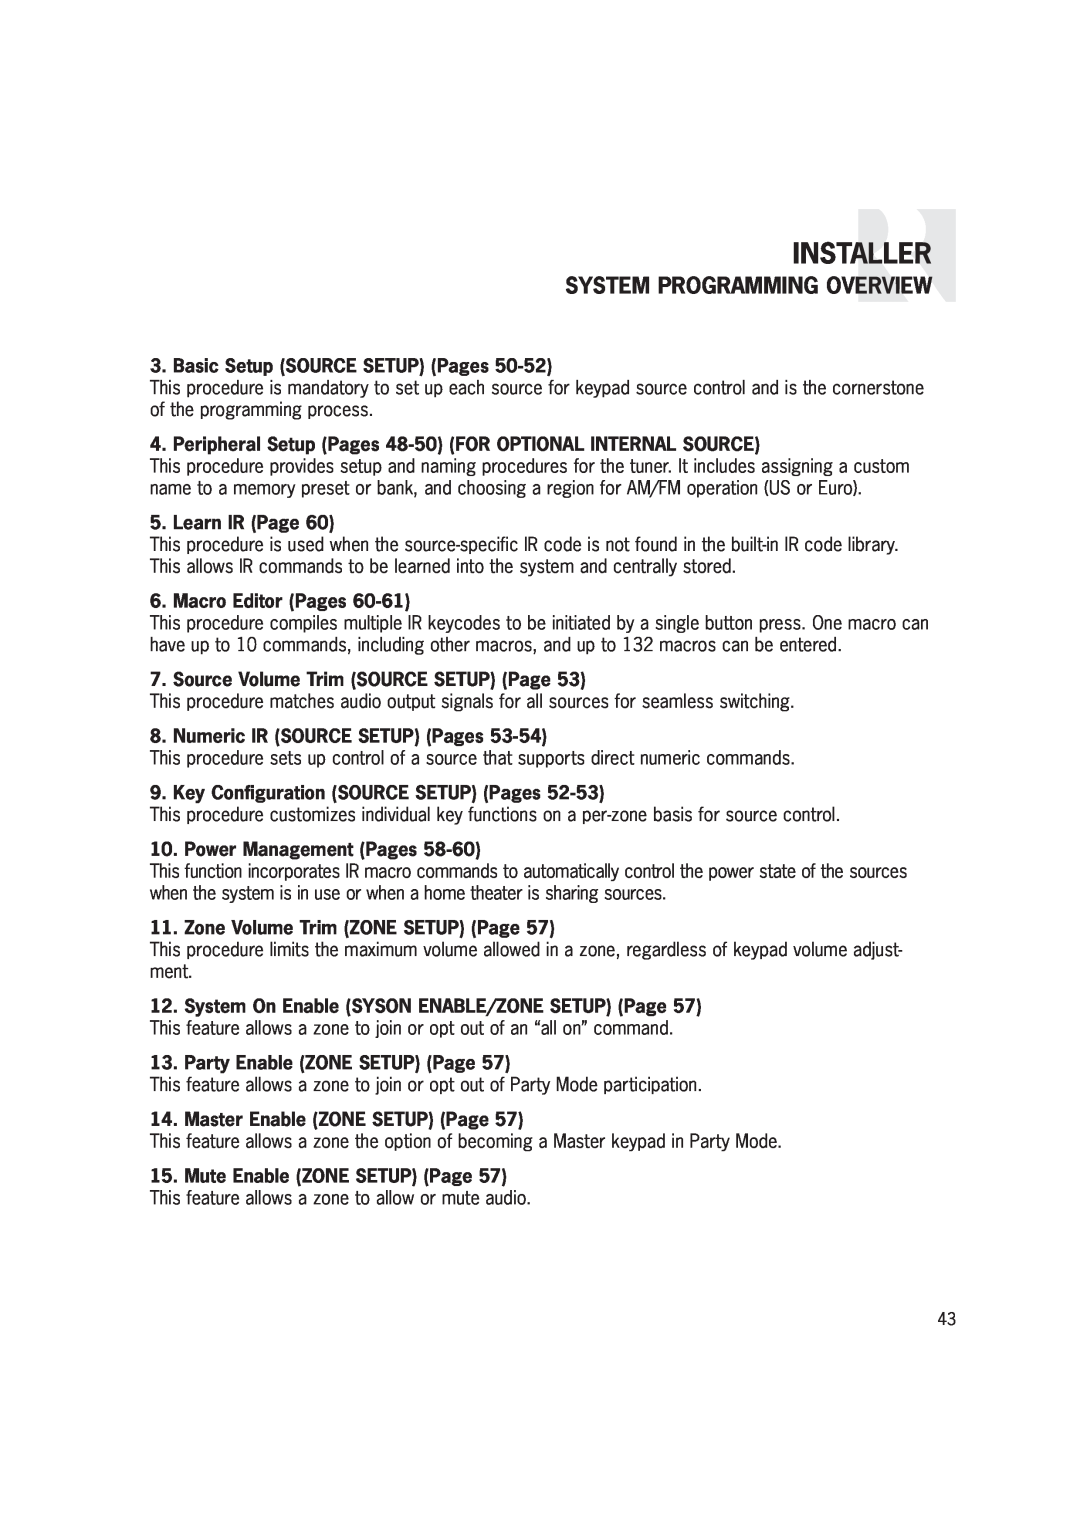 Russound CAM6.6T-S1 instruction manual Installer, System Programming Overview, Basic Setup SOURCE SETUP Pages 